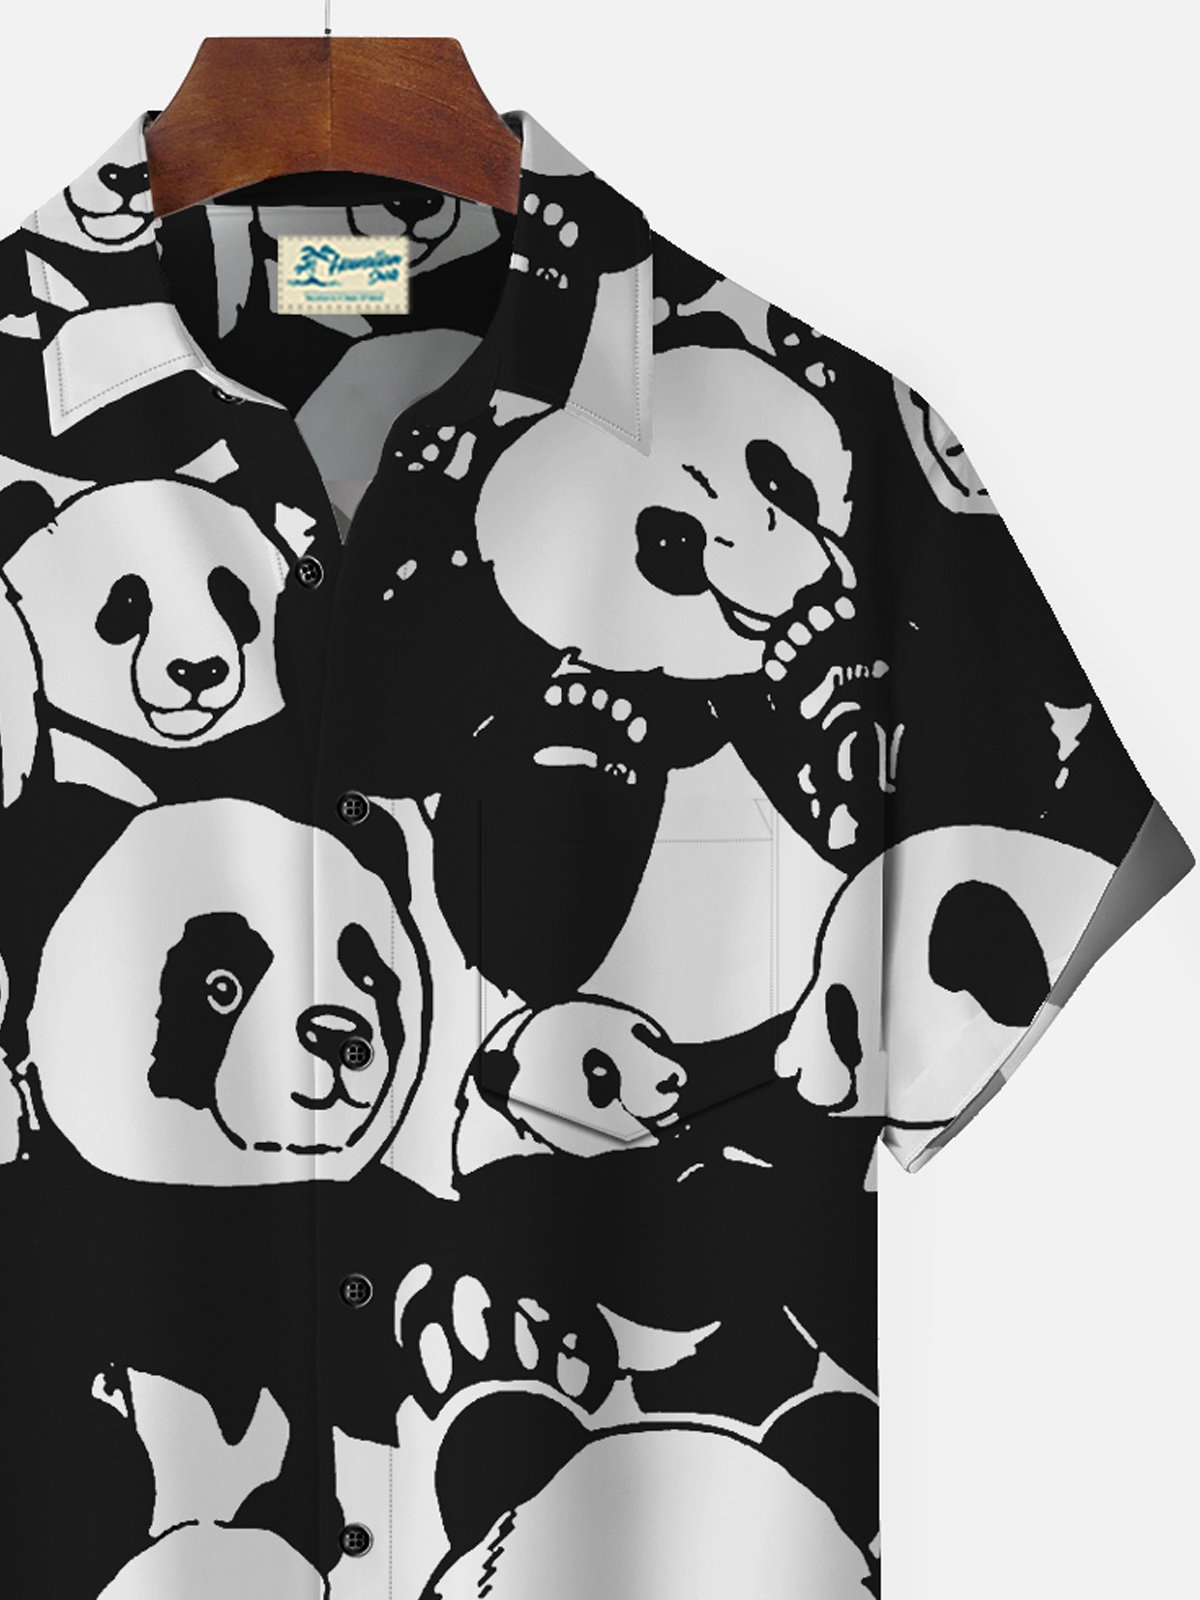 Royaura Beach Holiday Black Panda Men's Hawaiian Shirts Stretch Plus Size Aloha Camp Pocket Animal Shirts